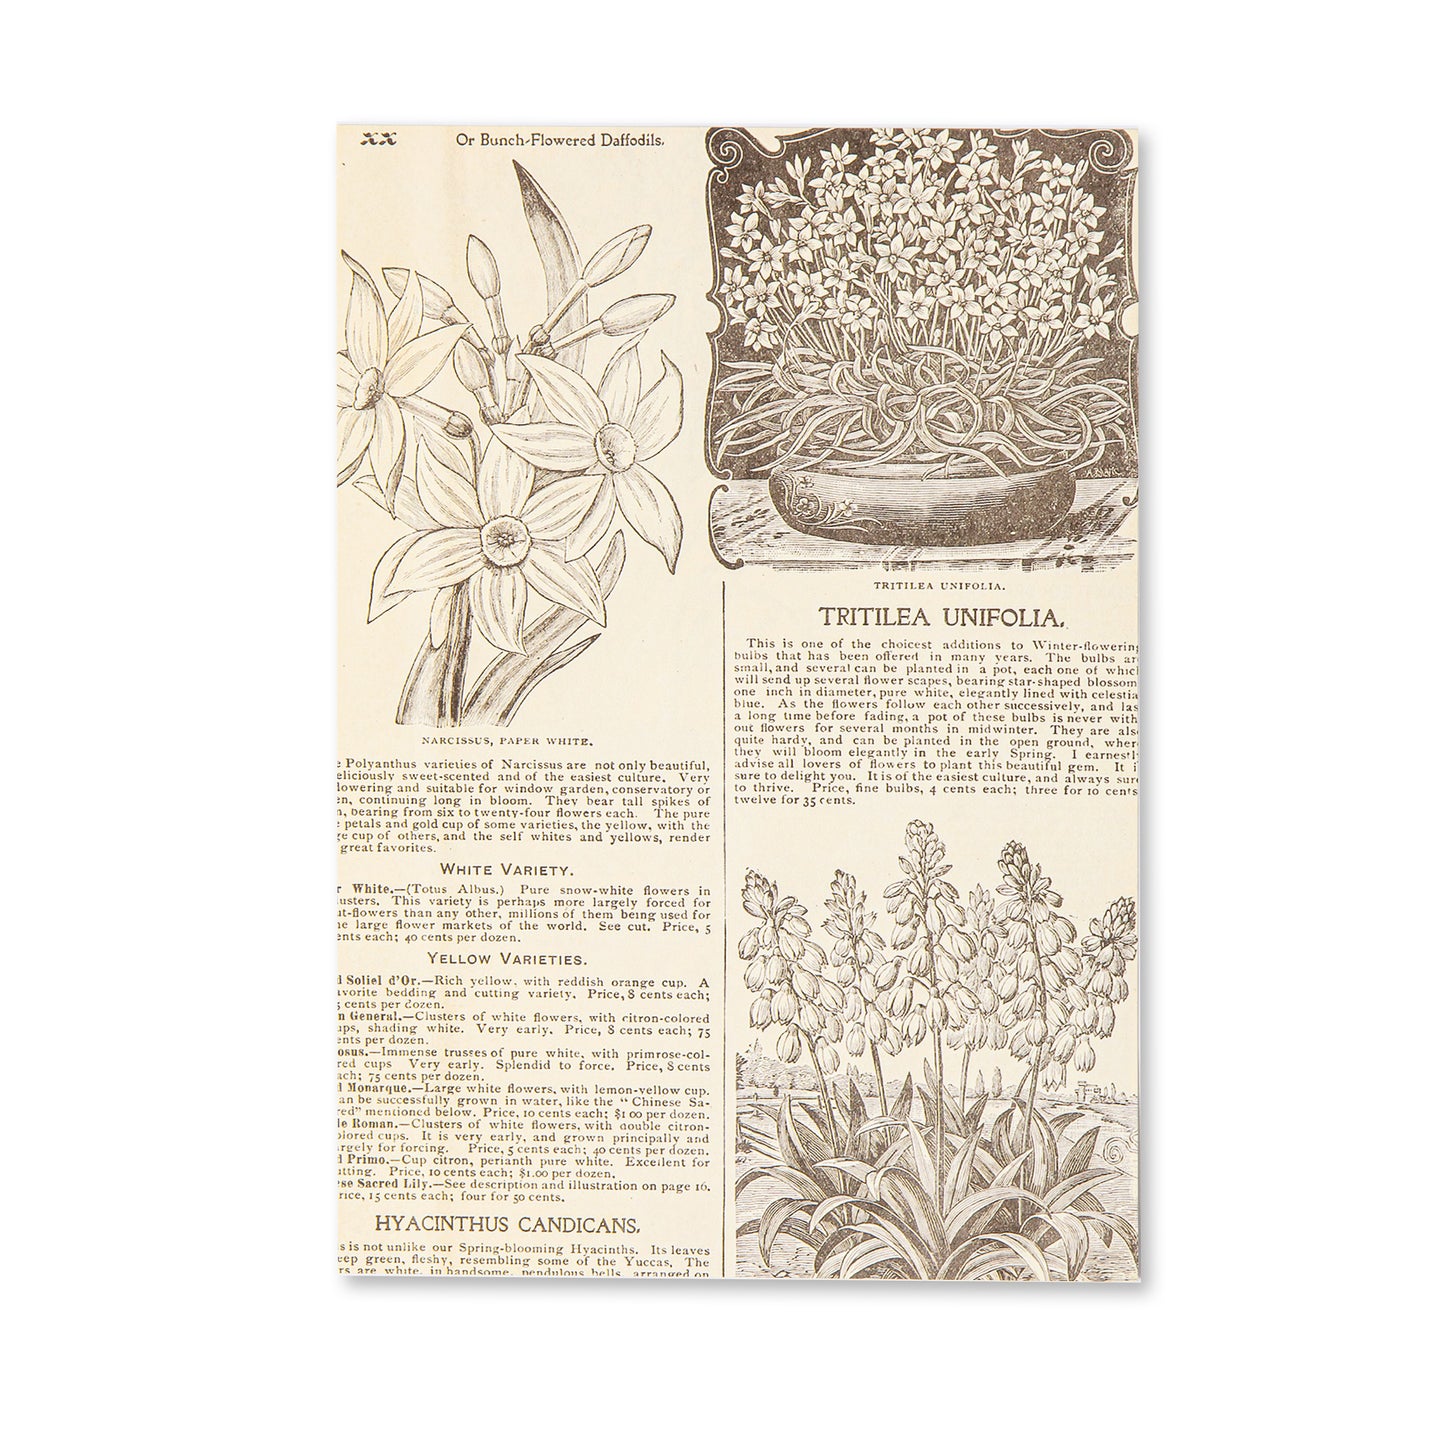 Vintage Scrapbooking Paper Pad - Floral - 30 Sheets